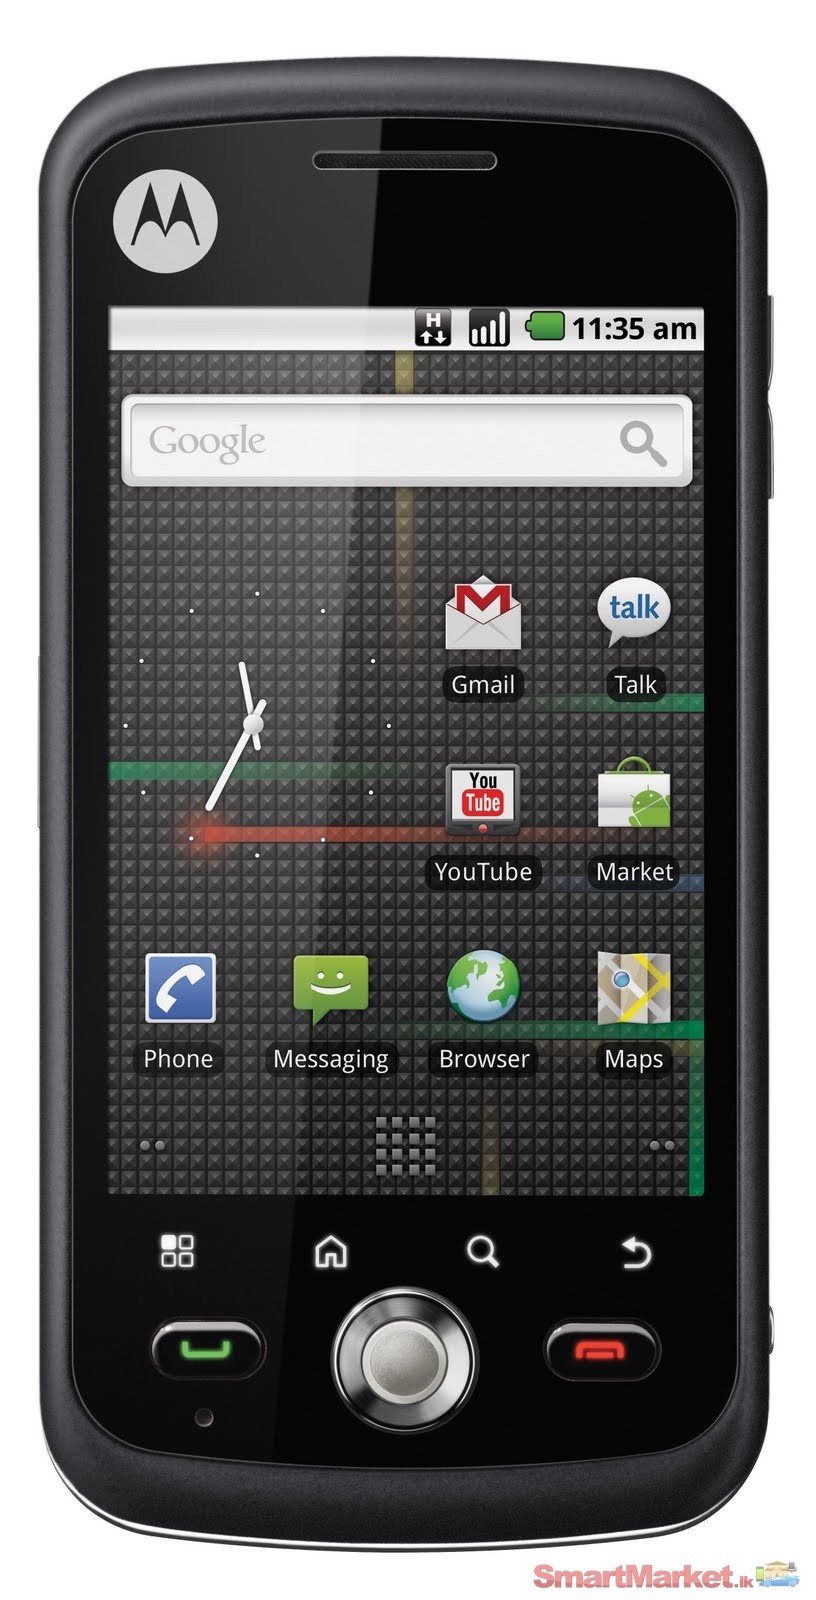 Brand new Motorola XT5 502 Smartphone